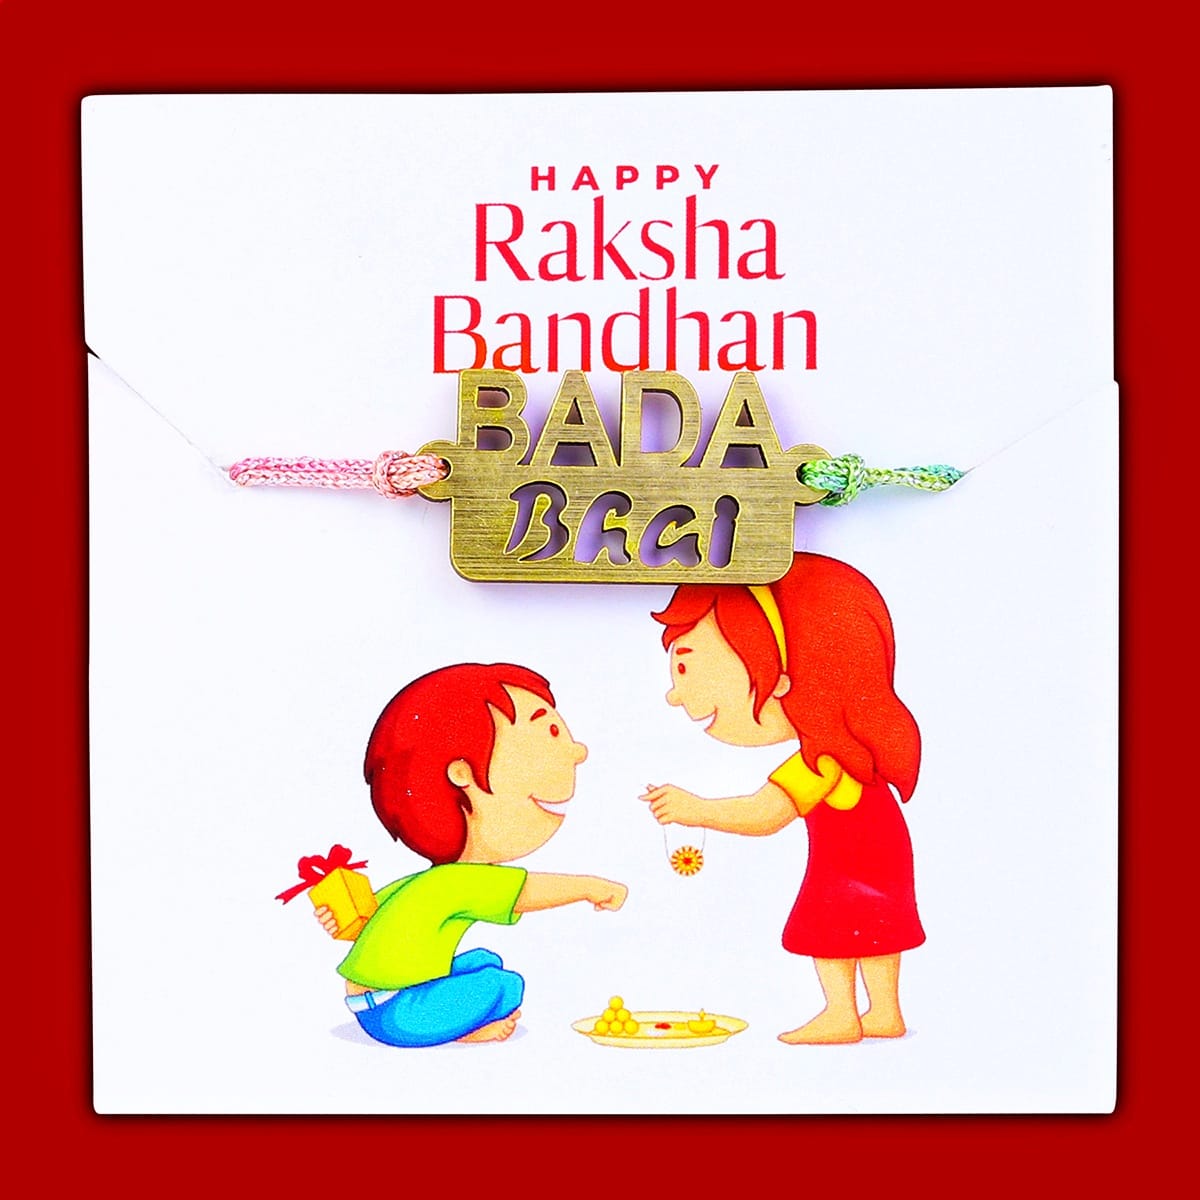 (COMBO of 2) Fancy Rakhi Designs with Slogan Chota Bhai/Bada Bhai Multicoloured Mauli Raksha Bandhan